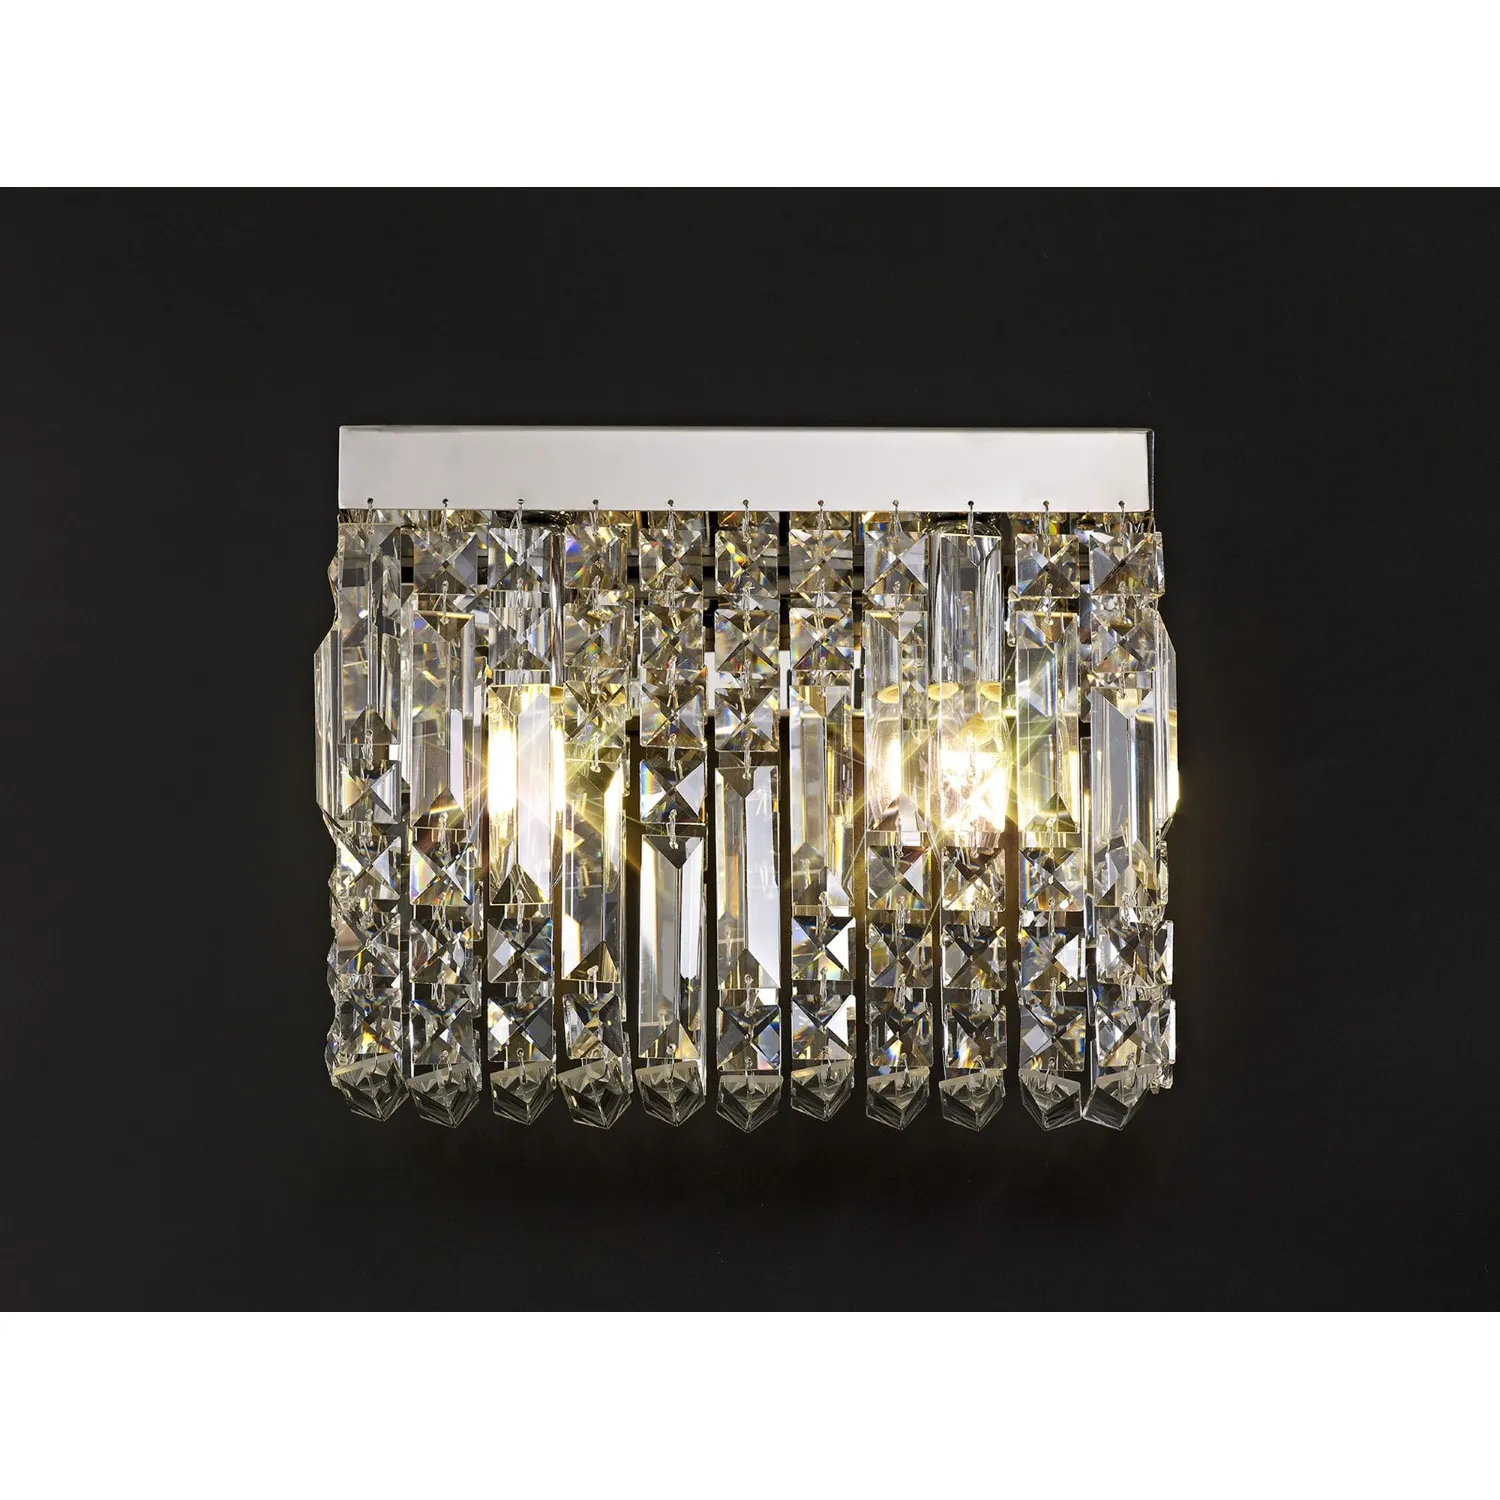 Boreham 29x13cm Rectangular Small Wall Lamp, 2 Light E14, Polished Chrome Crystal